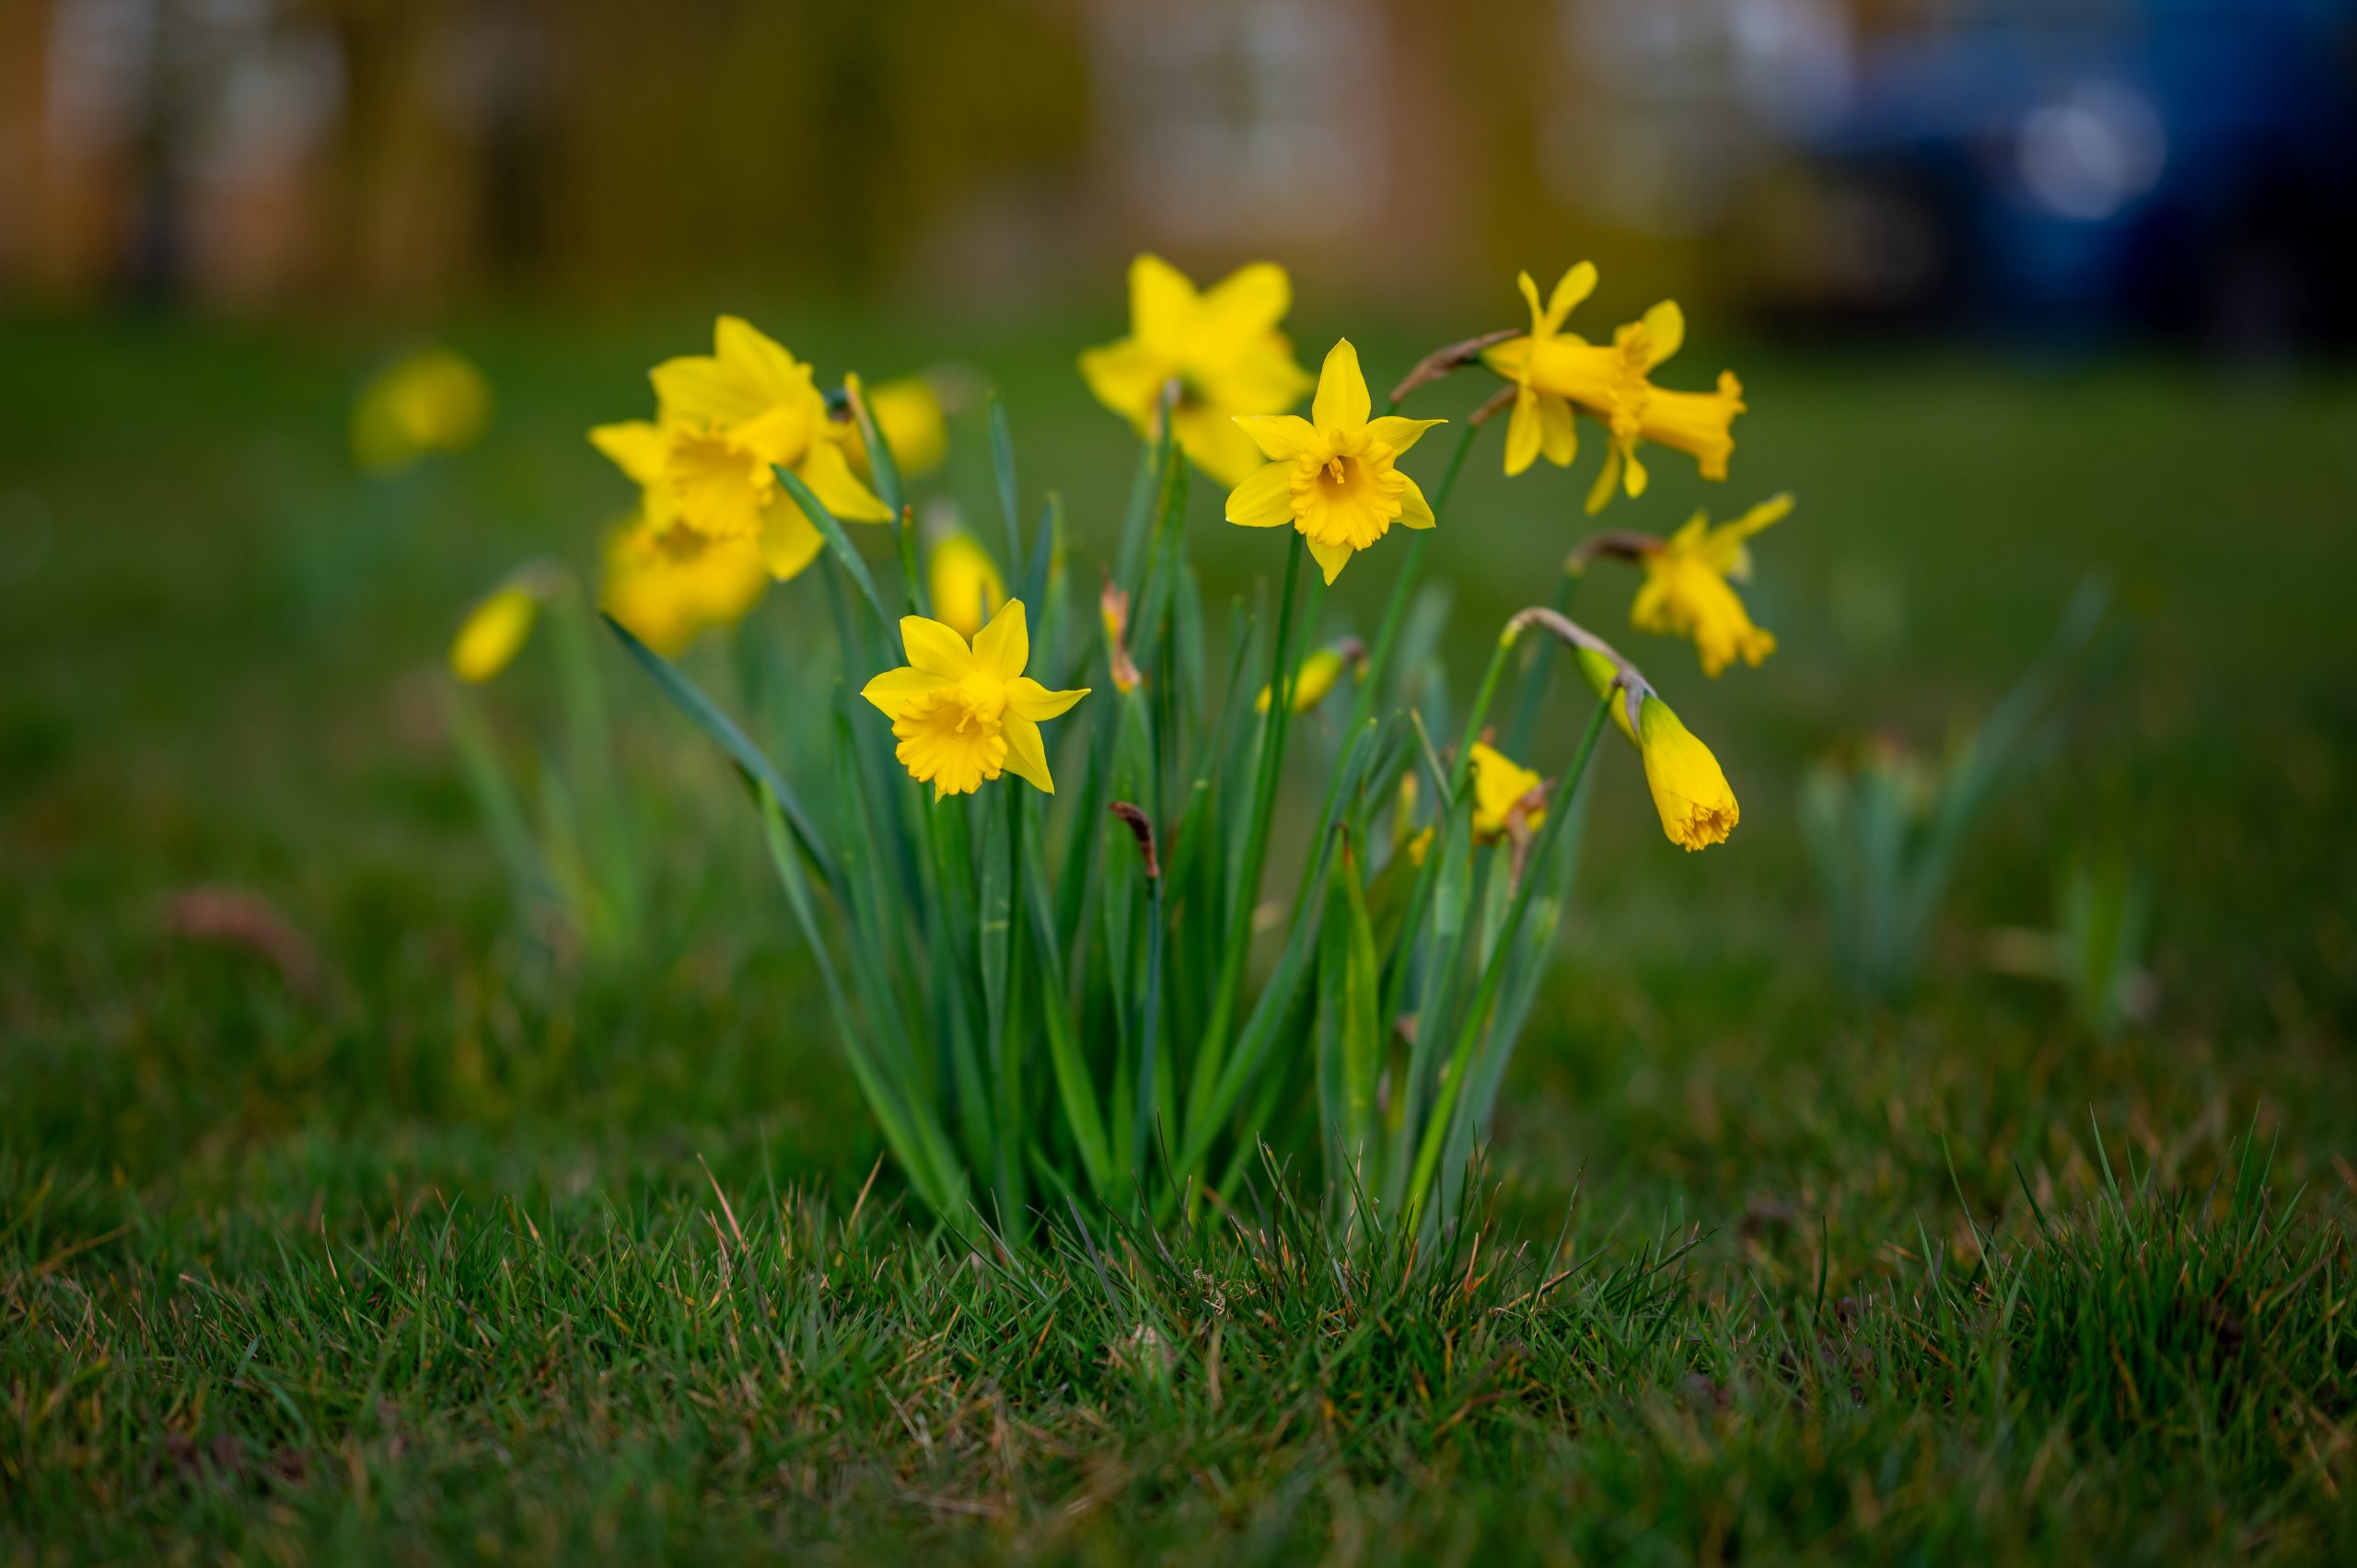 A clump of daffodils